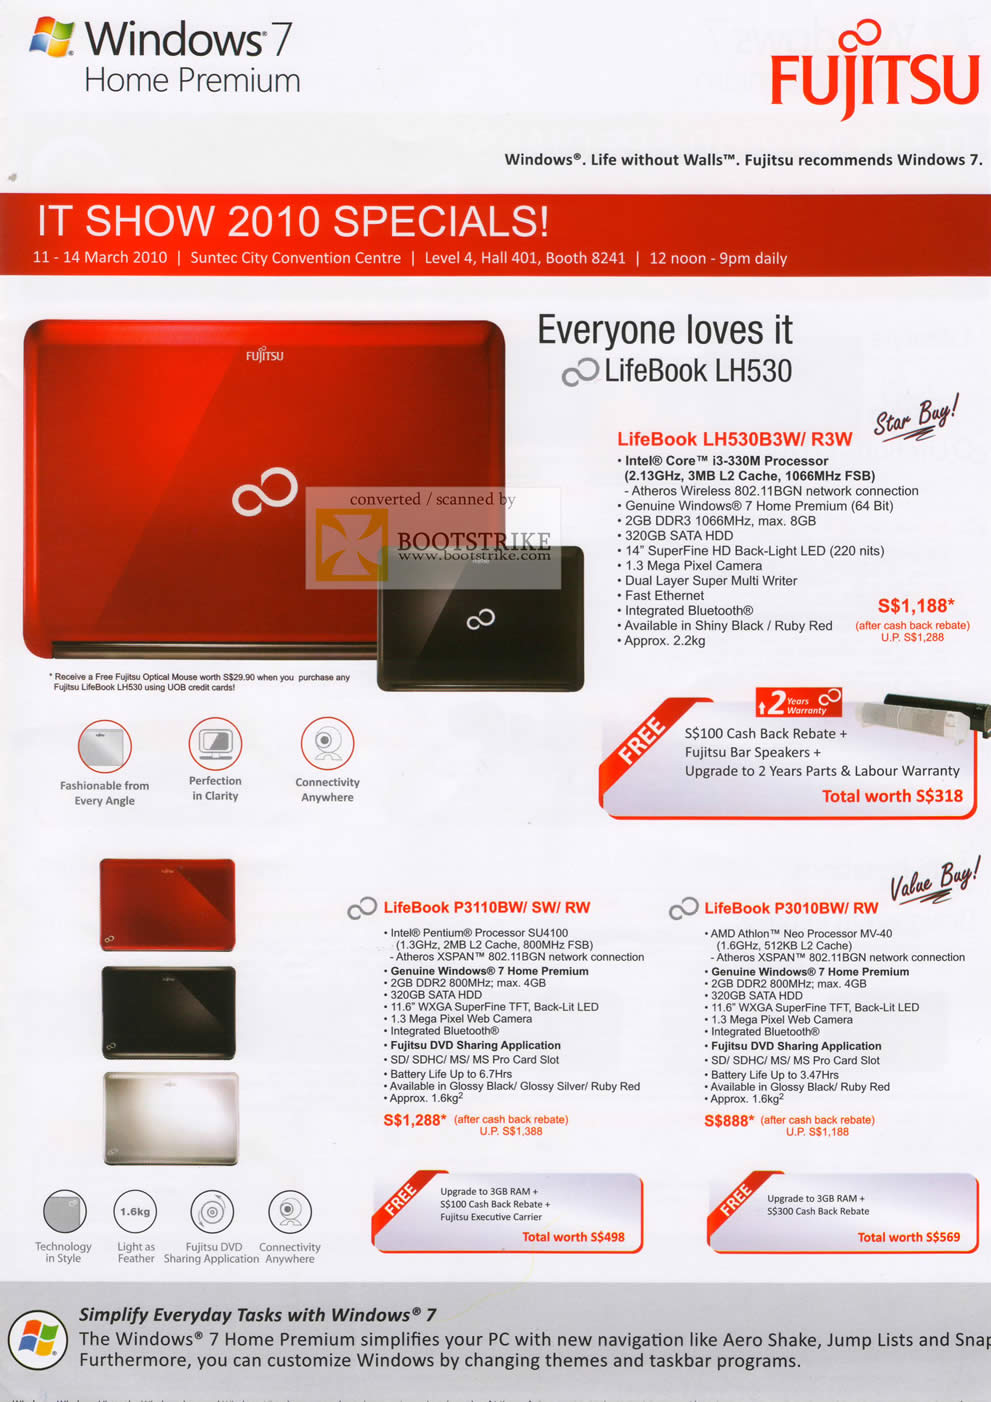 IT Show 2010 price list image brochure of Fujitsu Notebooks LifeBook LH530 B3W R3W P3110 Bw Sw RW P3010